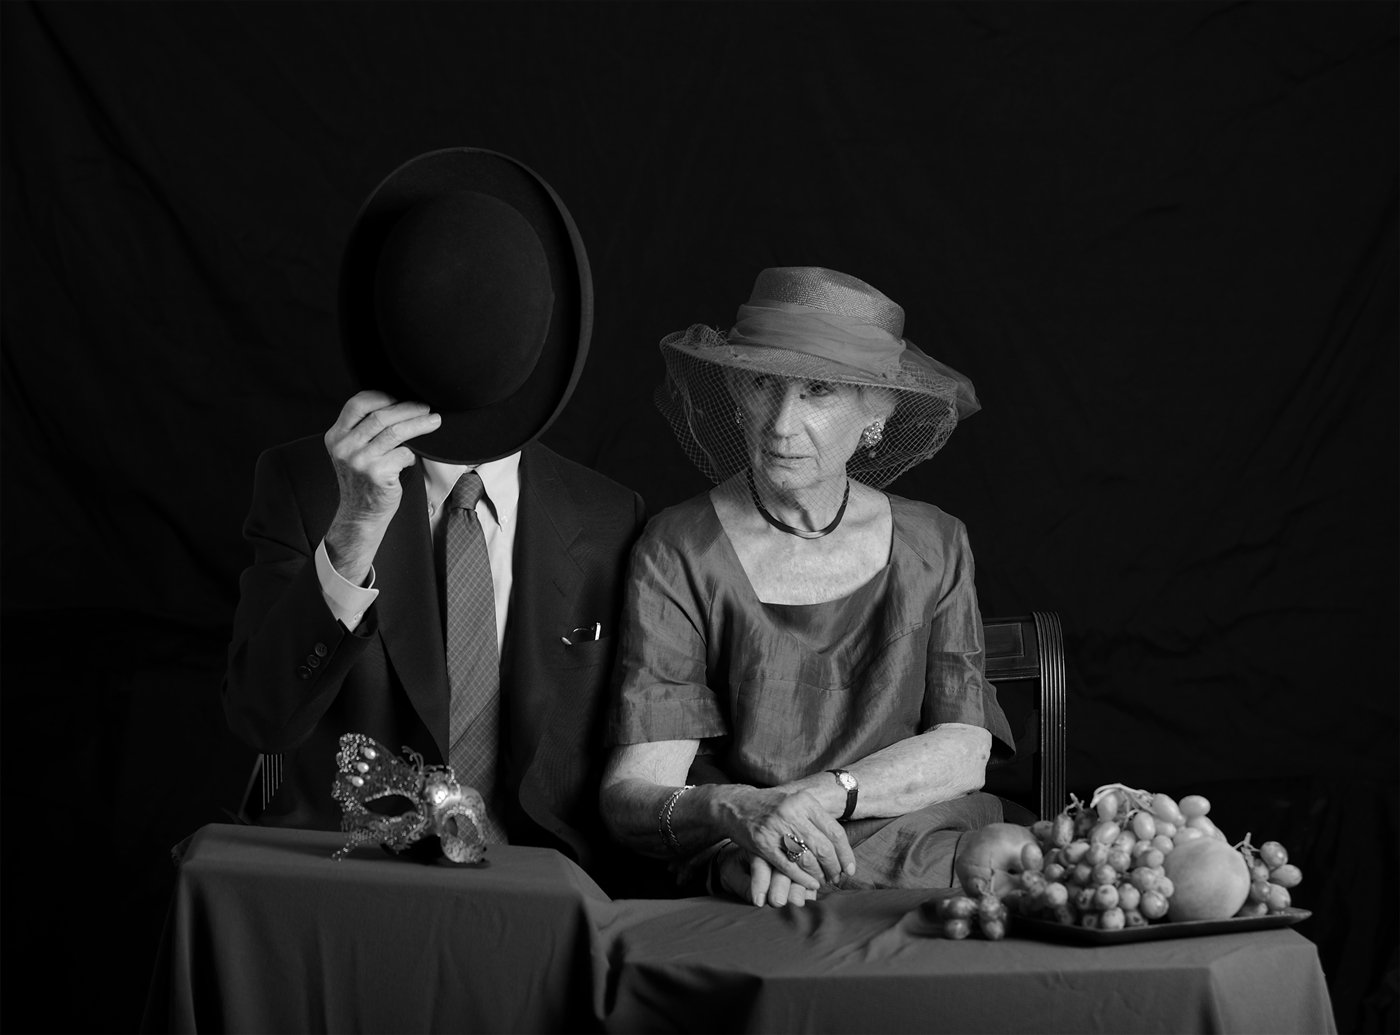     Portrait of Gordon and Veska, Vardan Aroustamian, Plano Photography Club, 1 HM